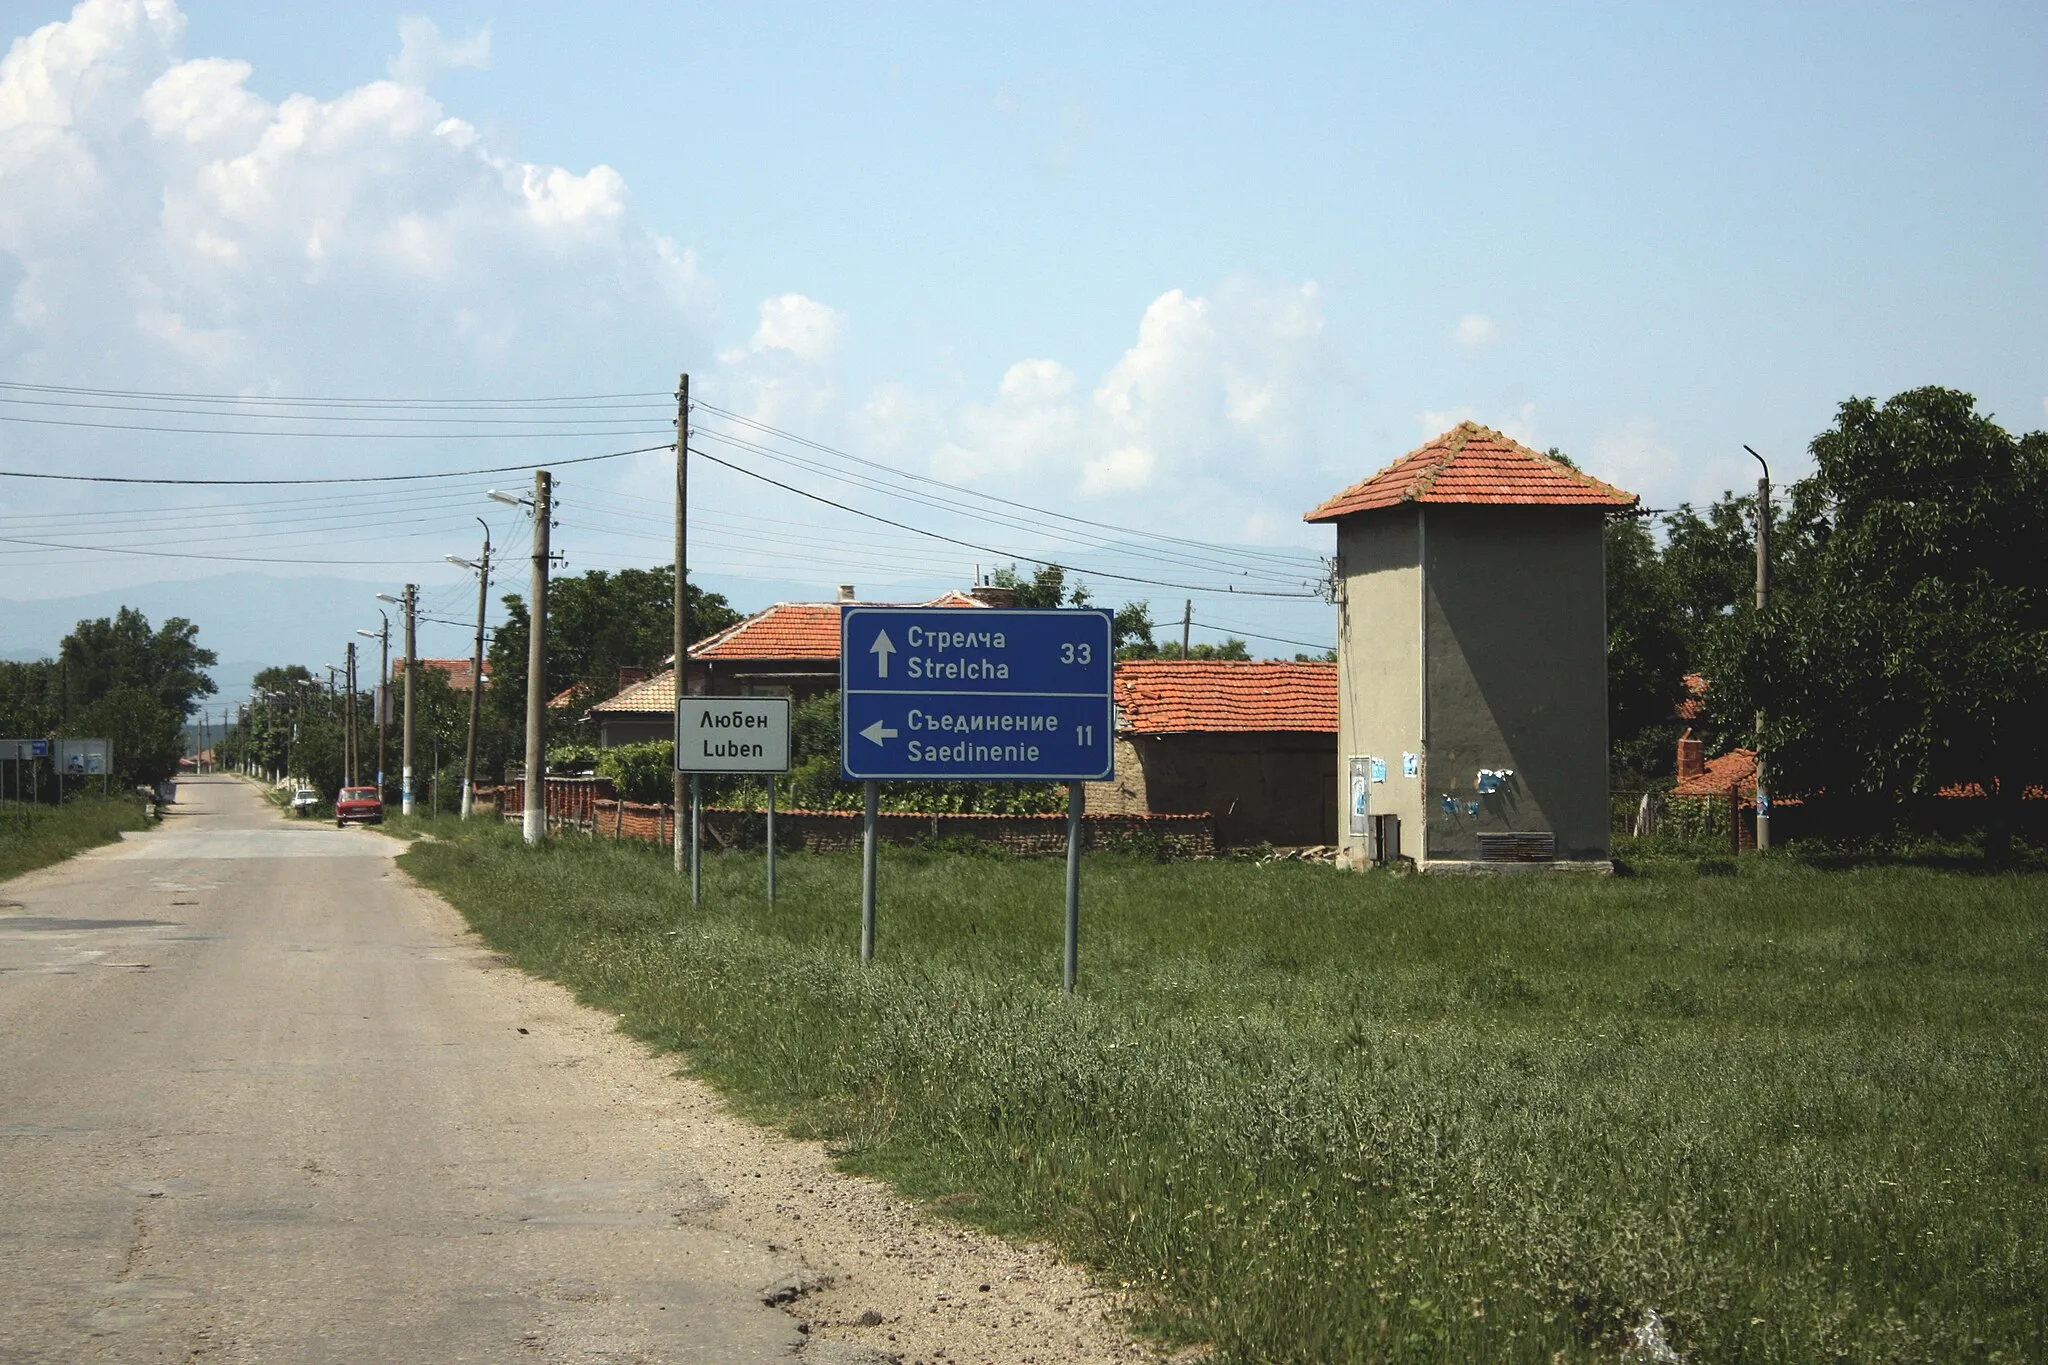 Photo showing: The entrance road to Lyuben village, Bulgaria